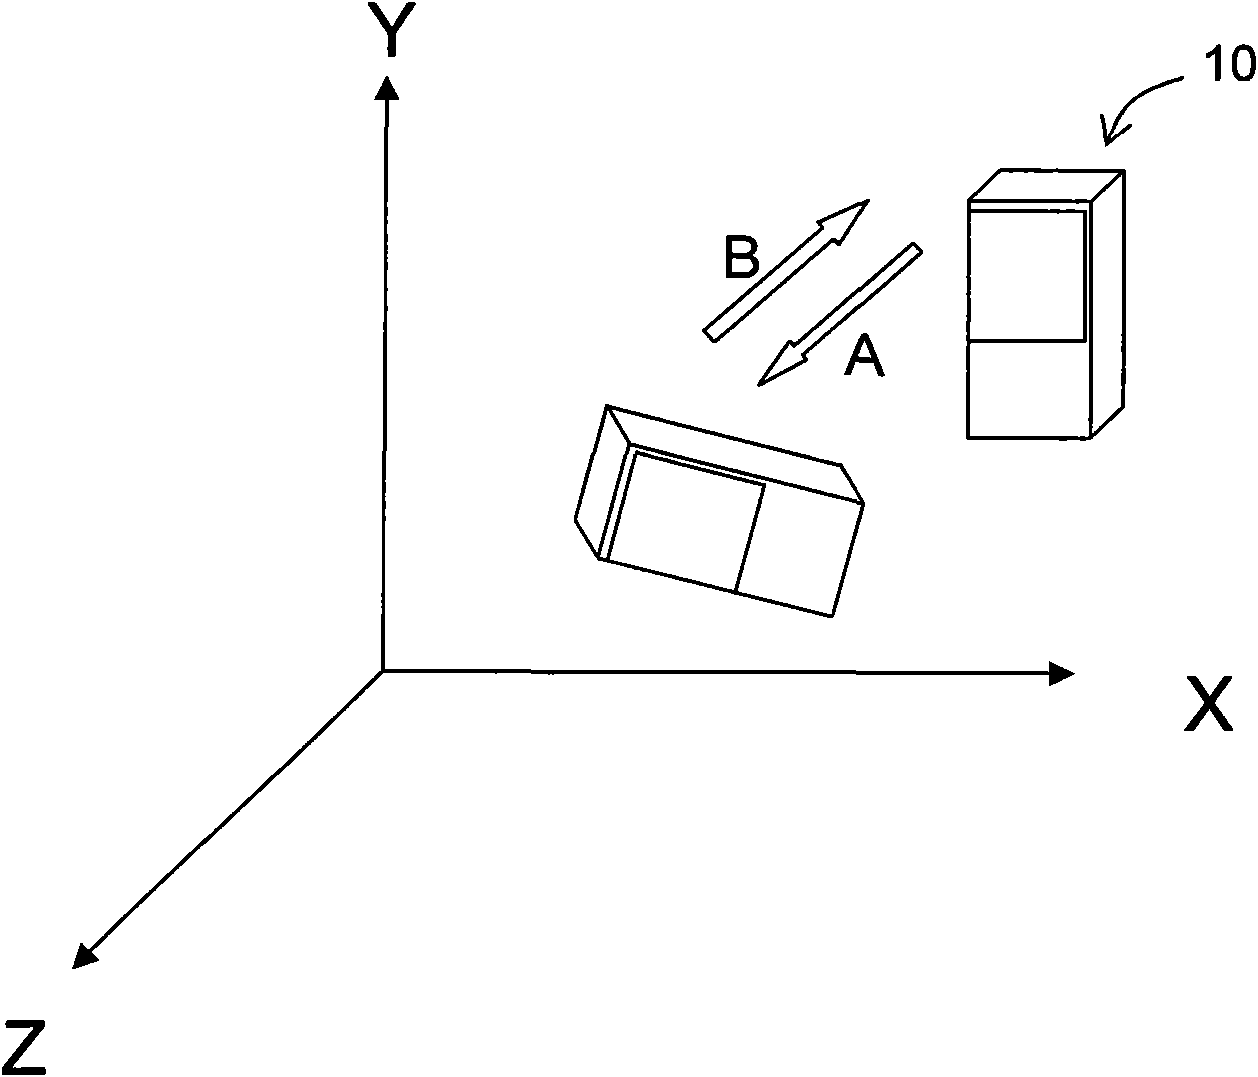 Operation method of handheld electronic device